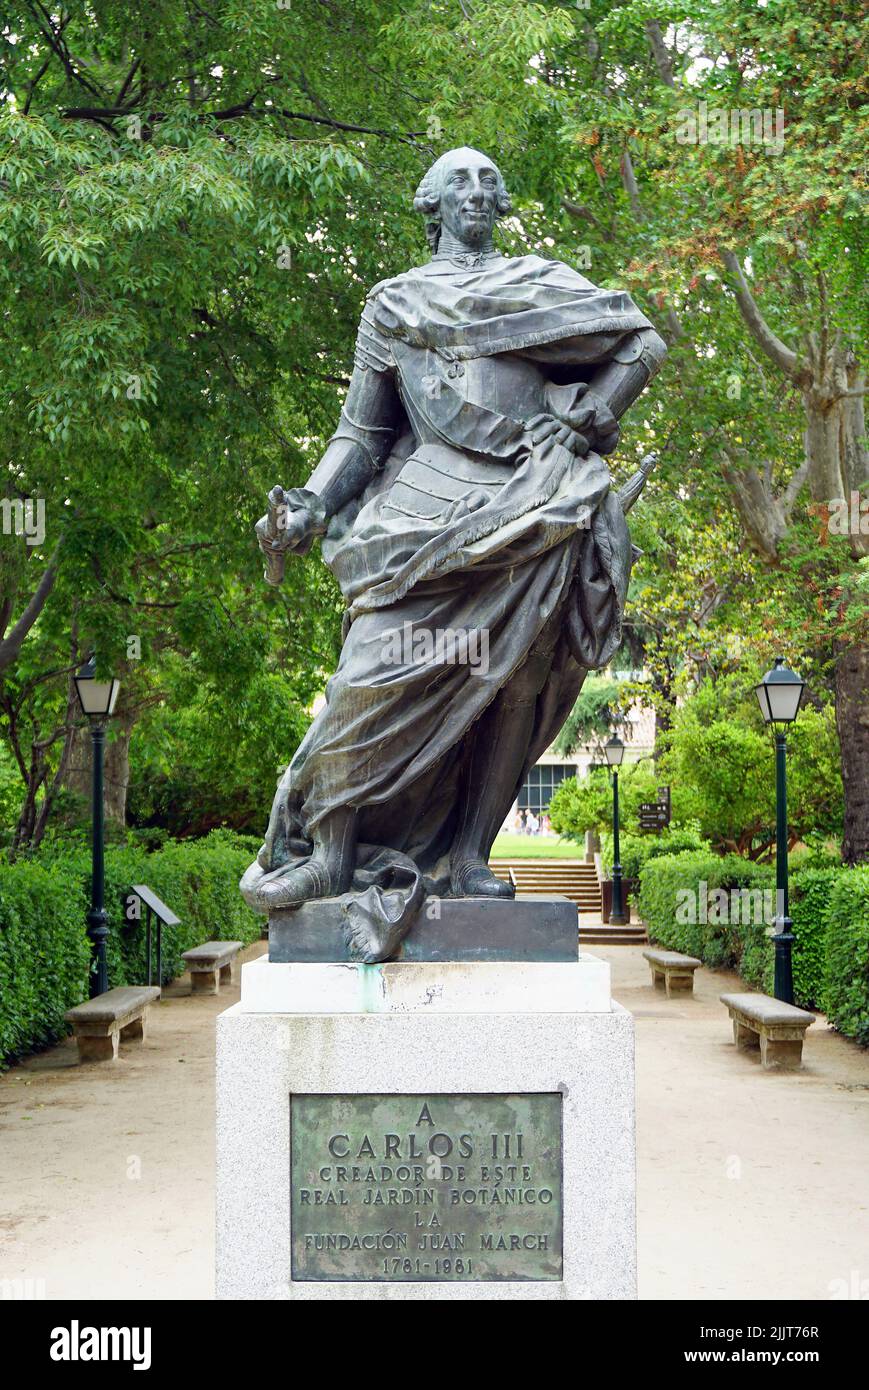 Statue of Carlos III or Charles III of Spain,creator of the Real Jardin Botánico in Madrid Spain. Stock Photo